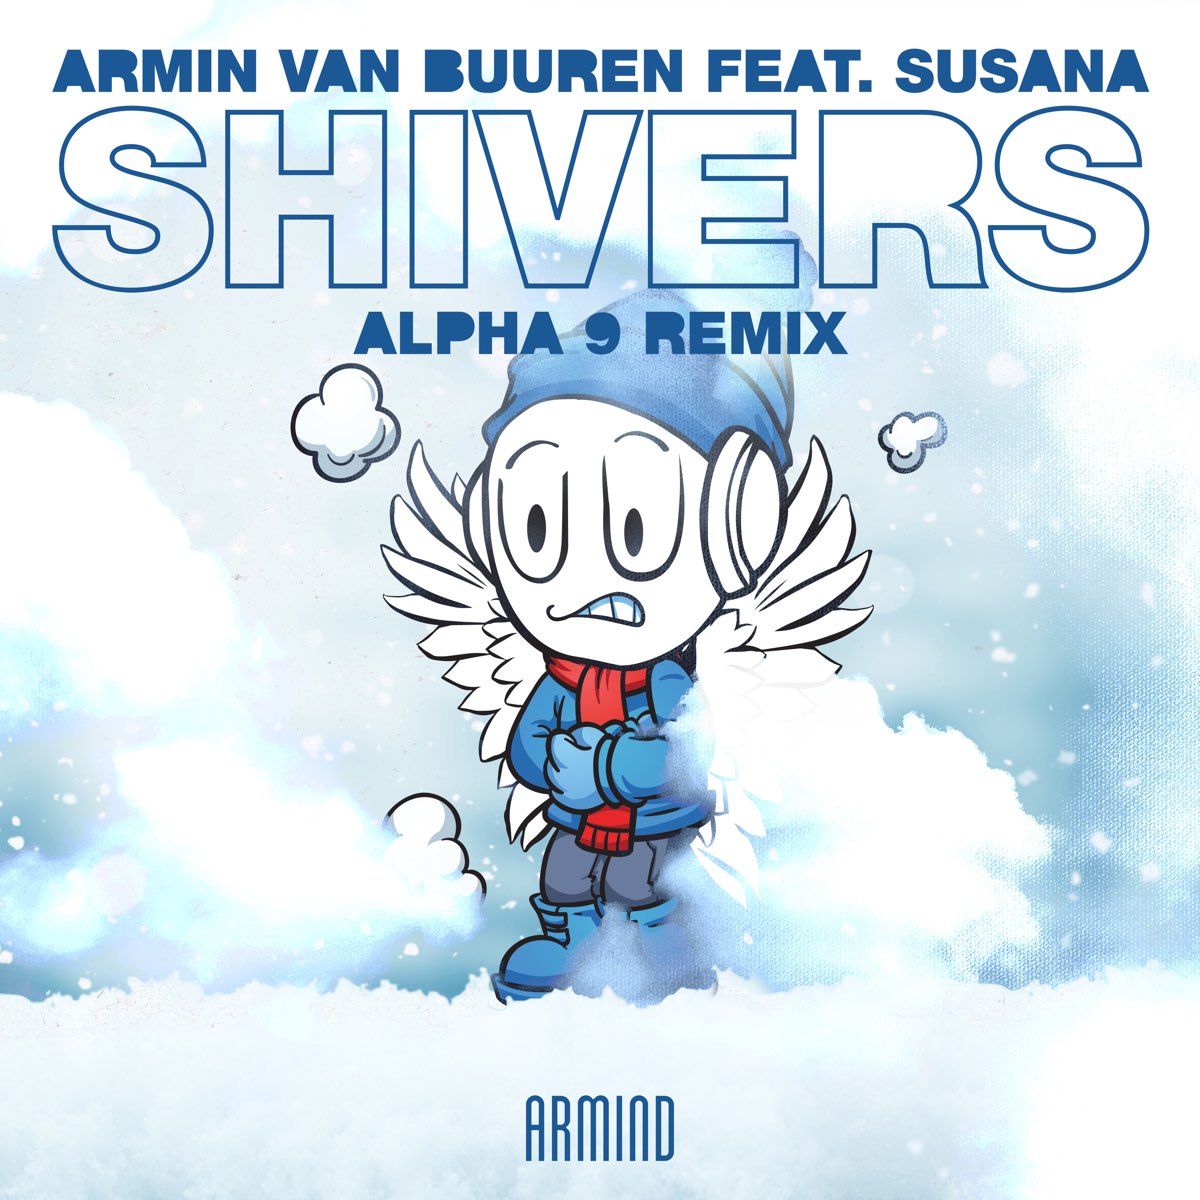 Armin van Buuren ft. featuring Susana Shivers (ALPHA 9 Remix) cover artwork